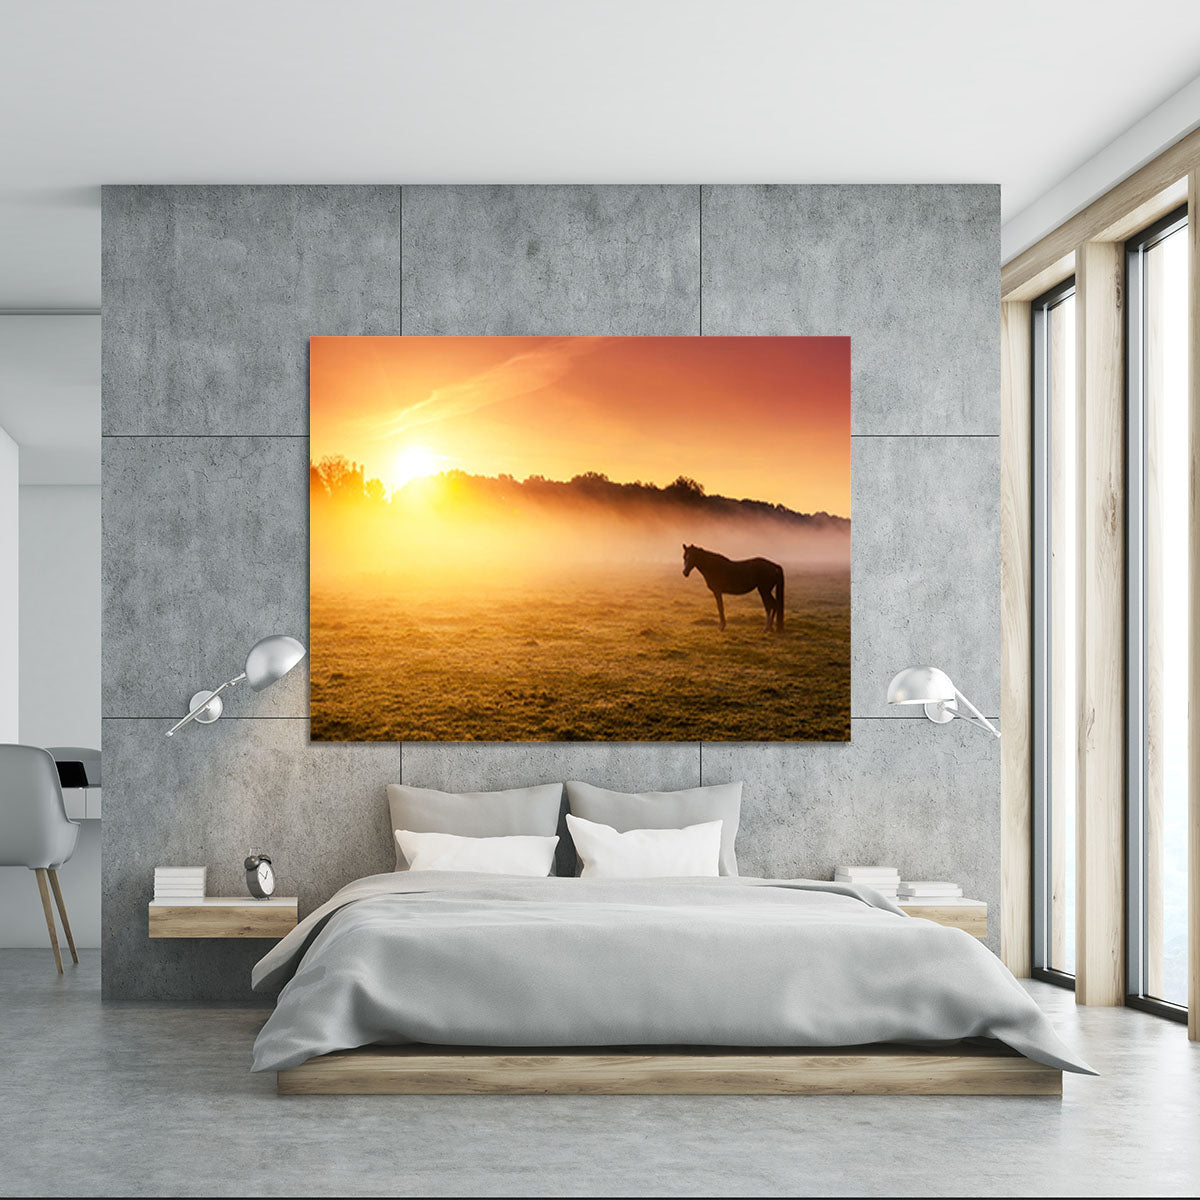 Arabian horses grazing on pasture at sundown in orange sunny beams. Dramatic foggy scene Canvas Print or Poster - Canvas Art Rocks - 5